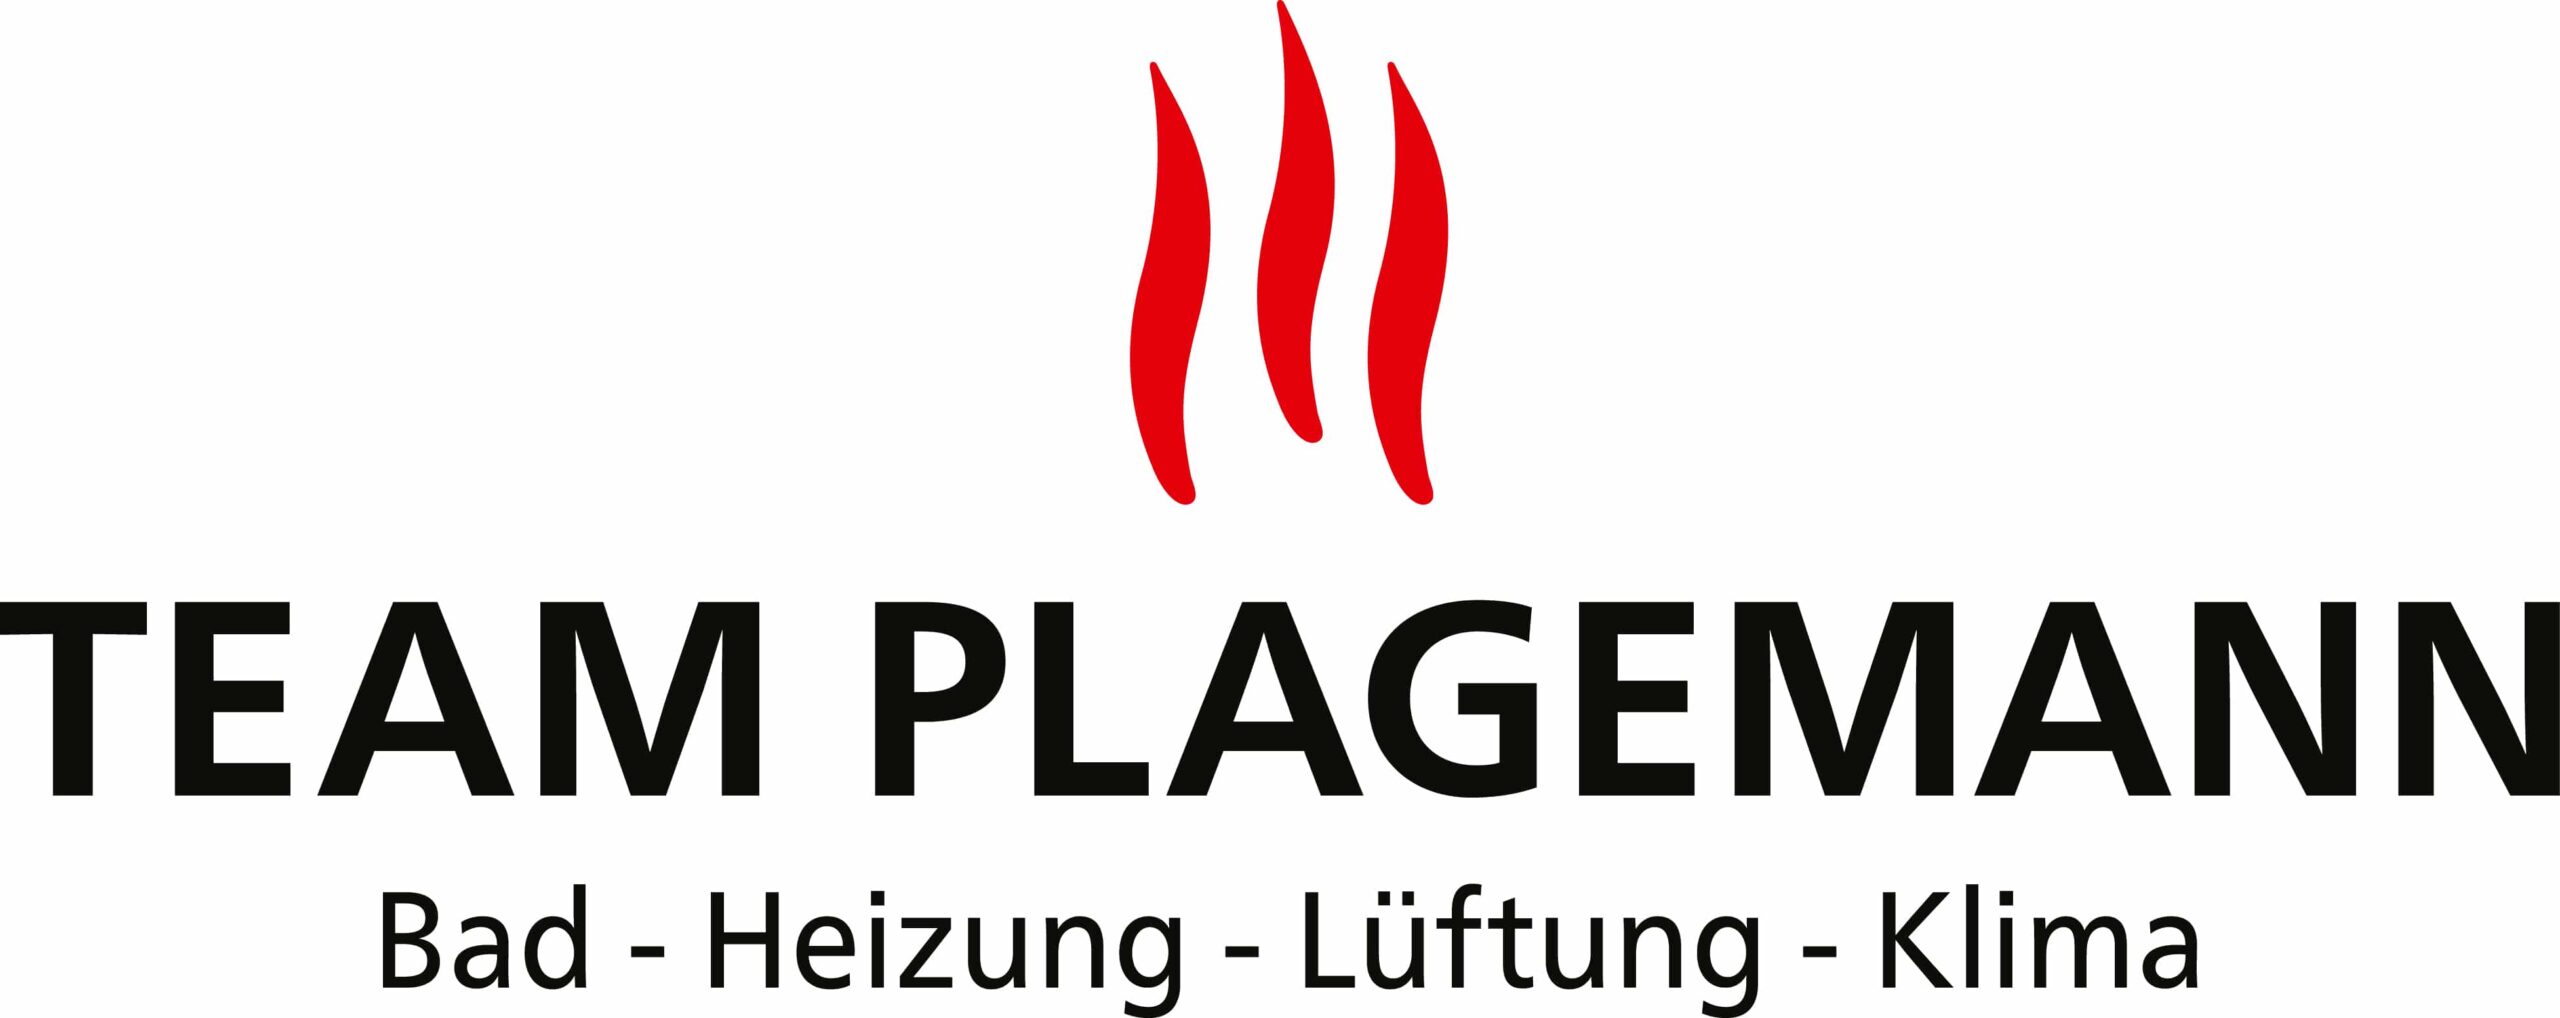 Team Plagemann - Bad, Heizung, Lüftung, Klima